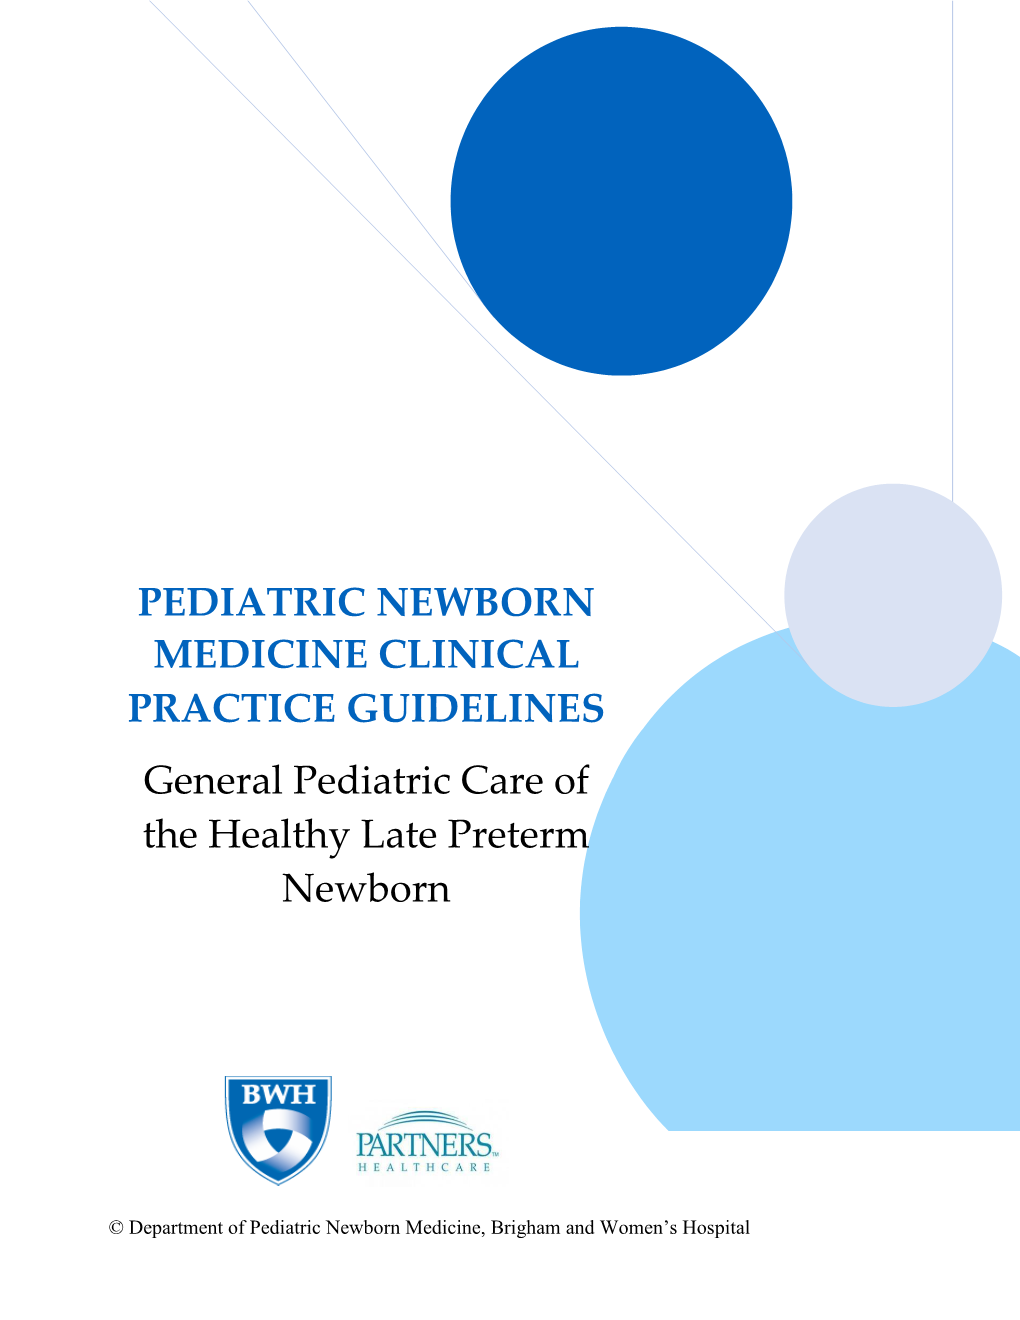 PEDIATRIC NEWBORN MEDICINE CLINICAL PRACTICE GUIDELINES General Pediatric Care of the Healthy Late Preterm Newborn